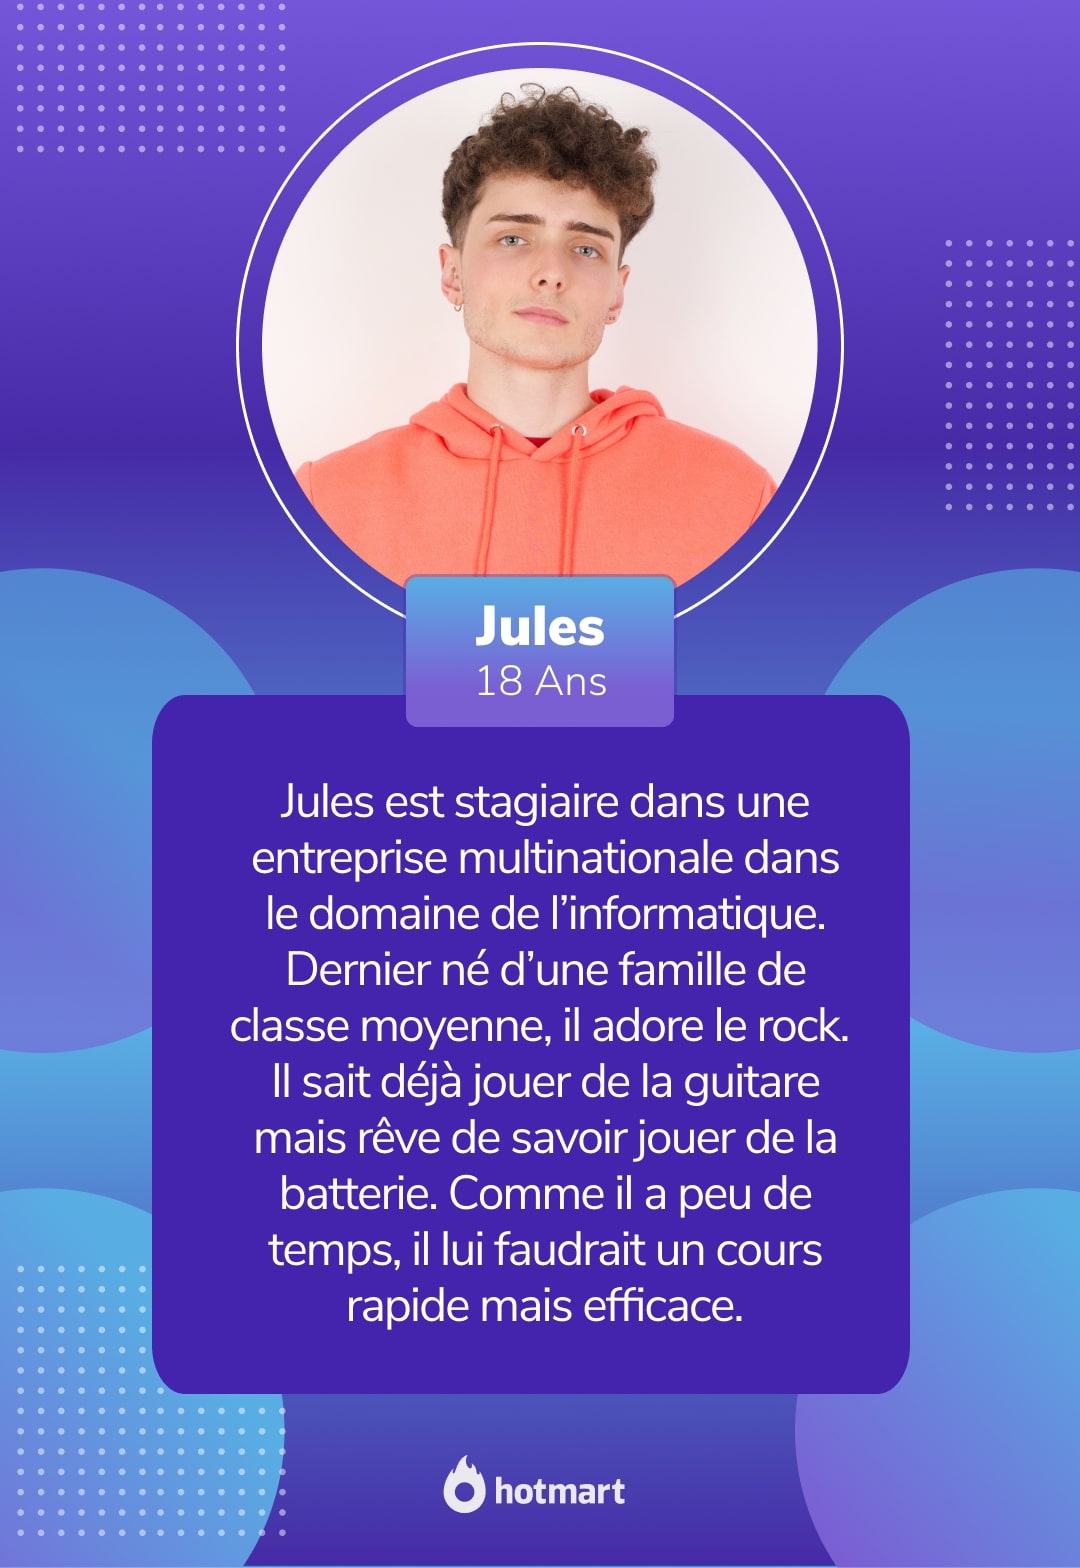 Jules profile